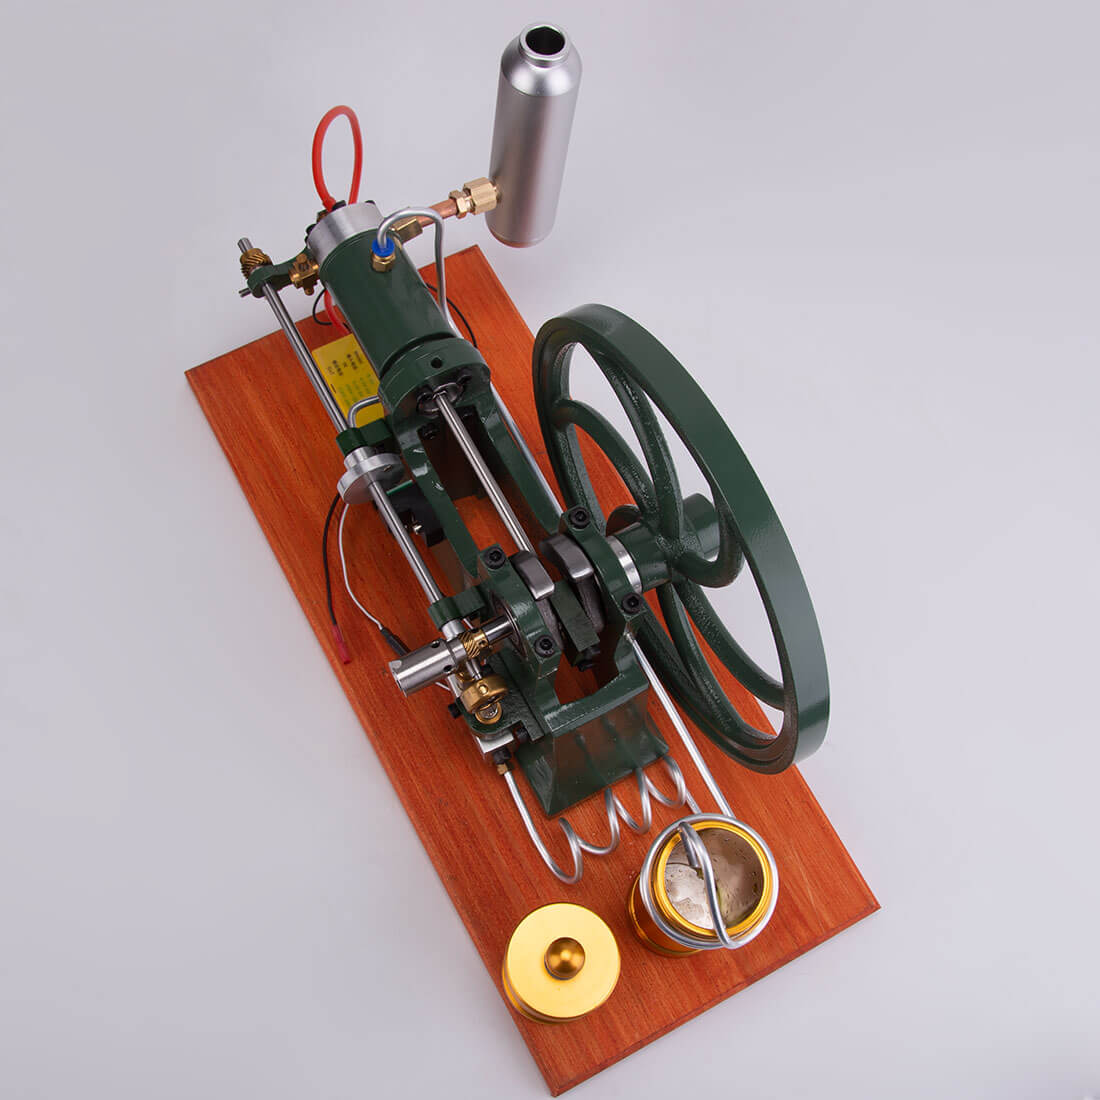 RETROL Vintage Horizontal Mill Engine Stationary Engine Model 4 Stroke Gasoline ICE - stirlingkit